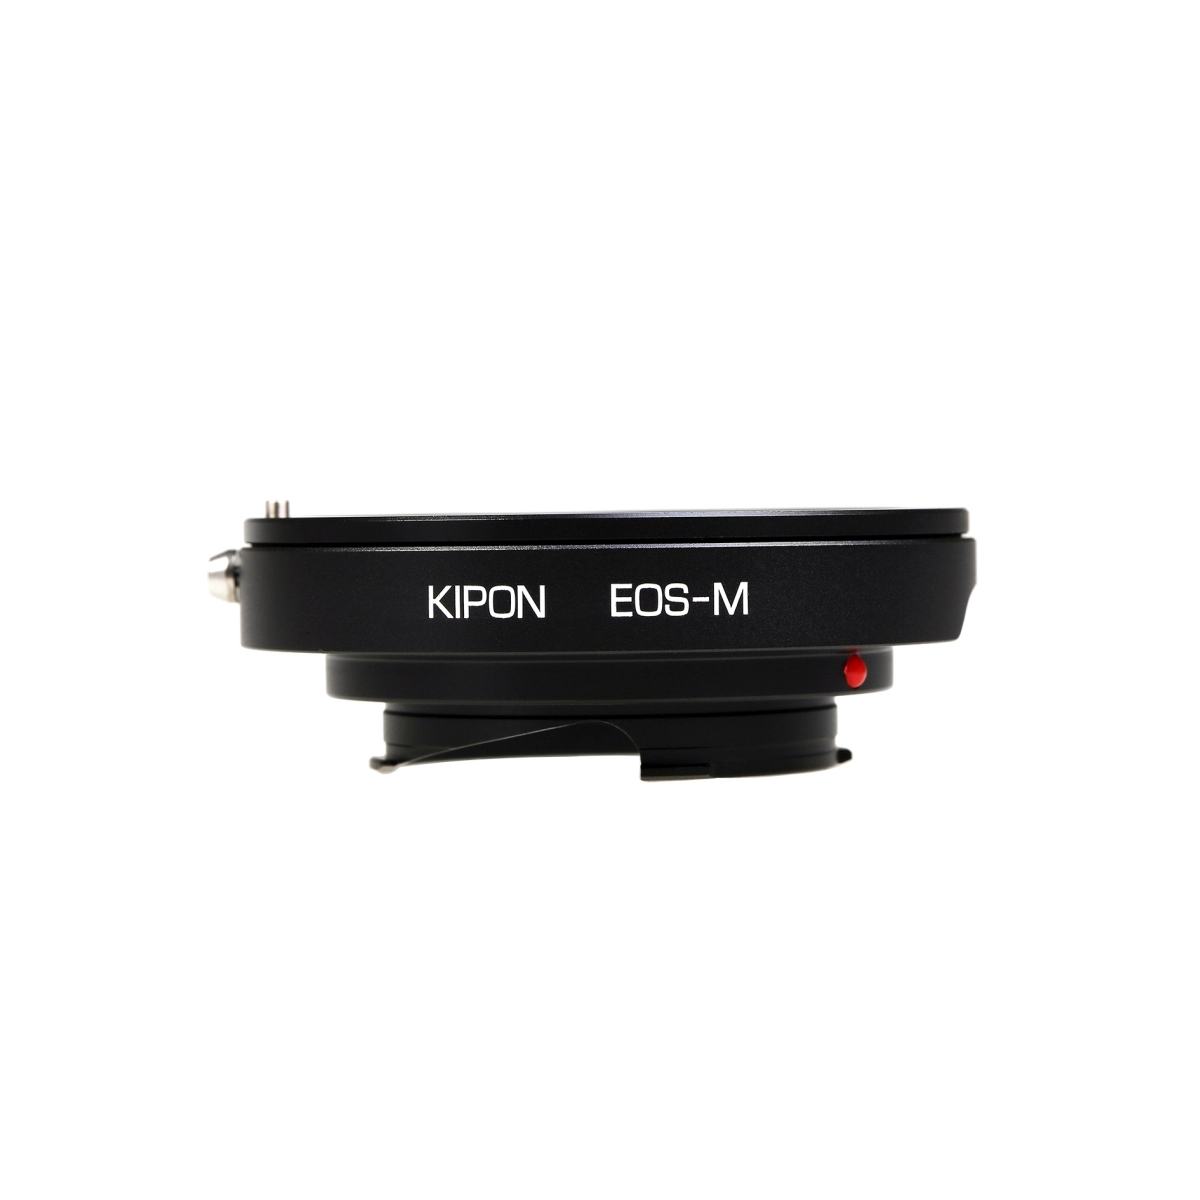 Kipon Adapter Canon EF to Leica M